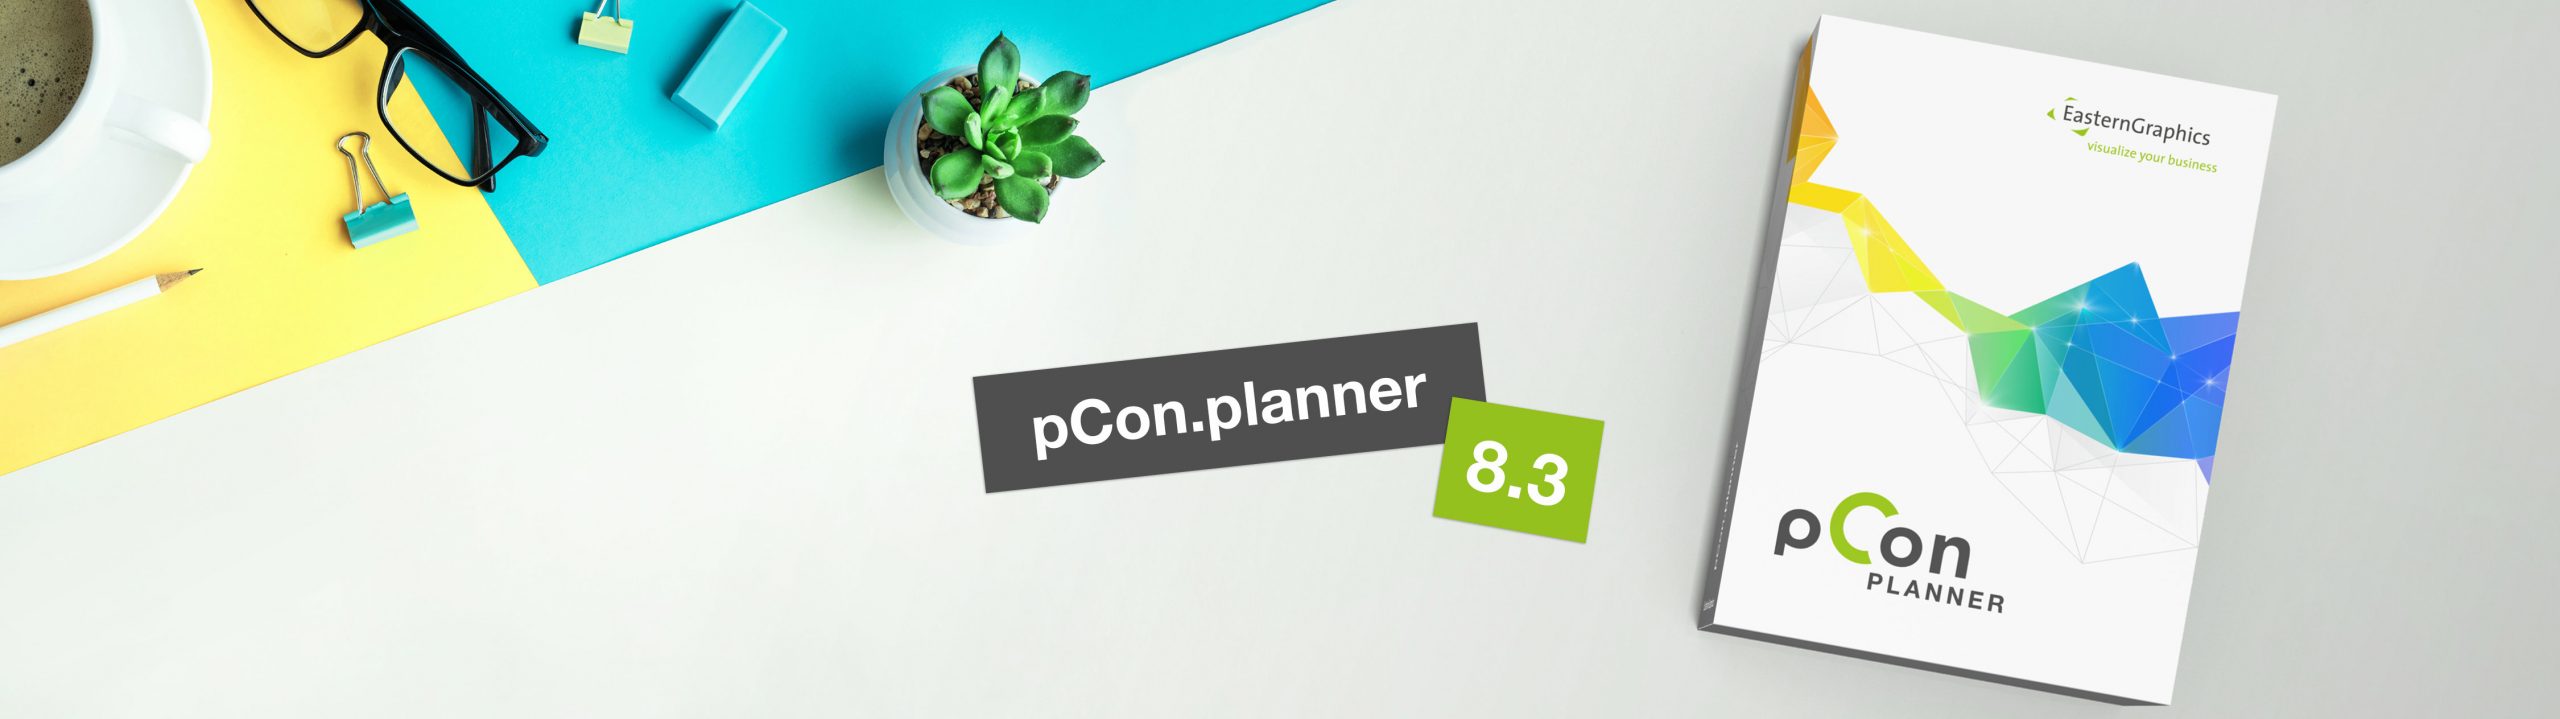 O pCon.planner 8.3 já está disponível!